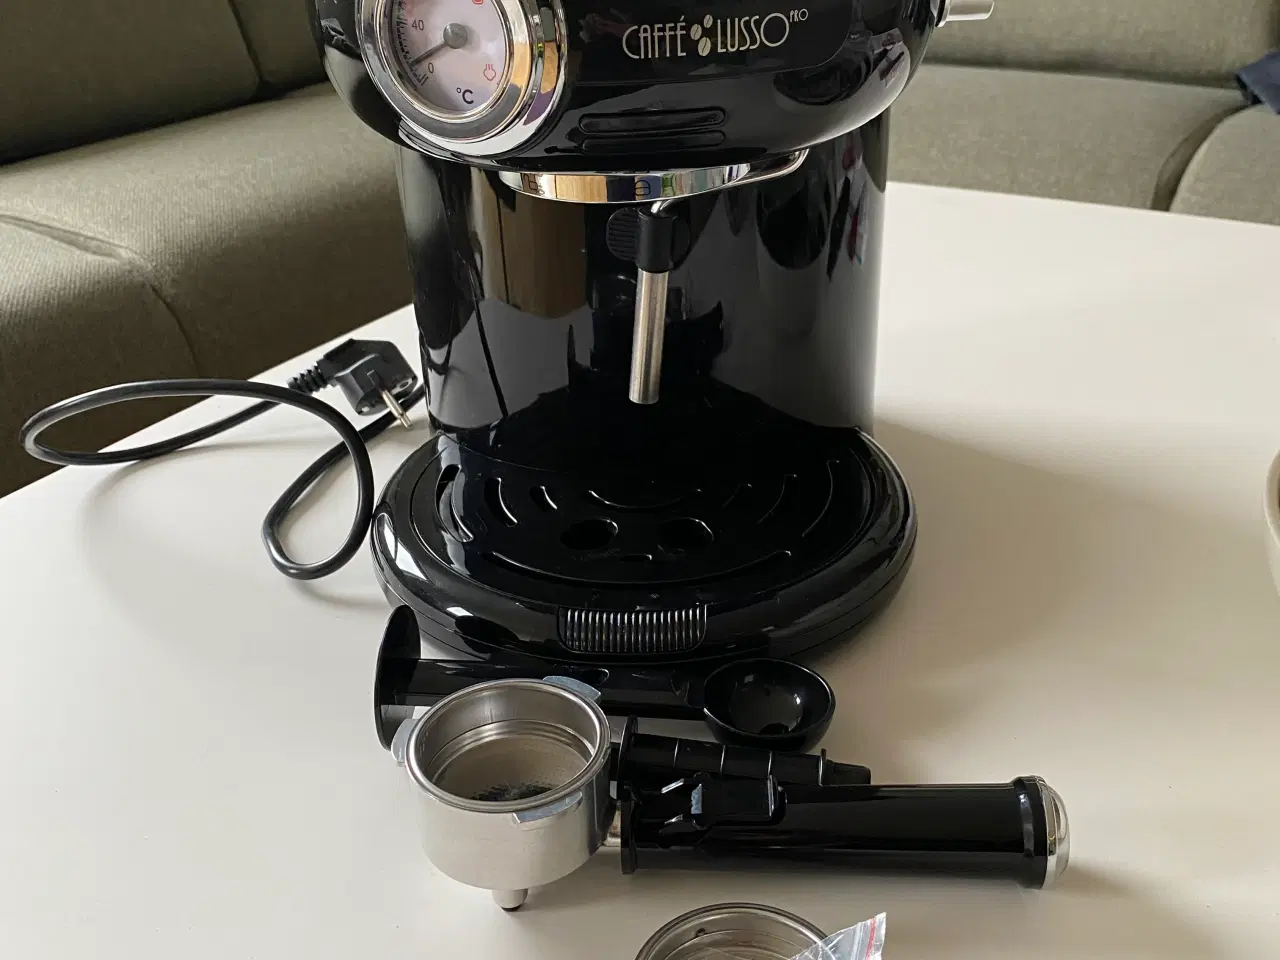 Billede 2 - Kaffemaskine/ caffe luso espresso